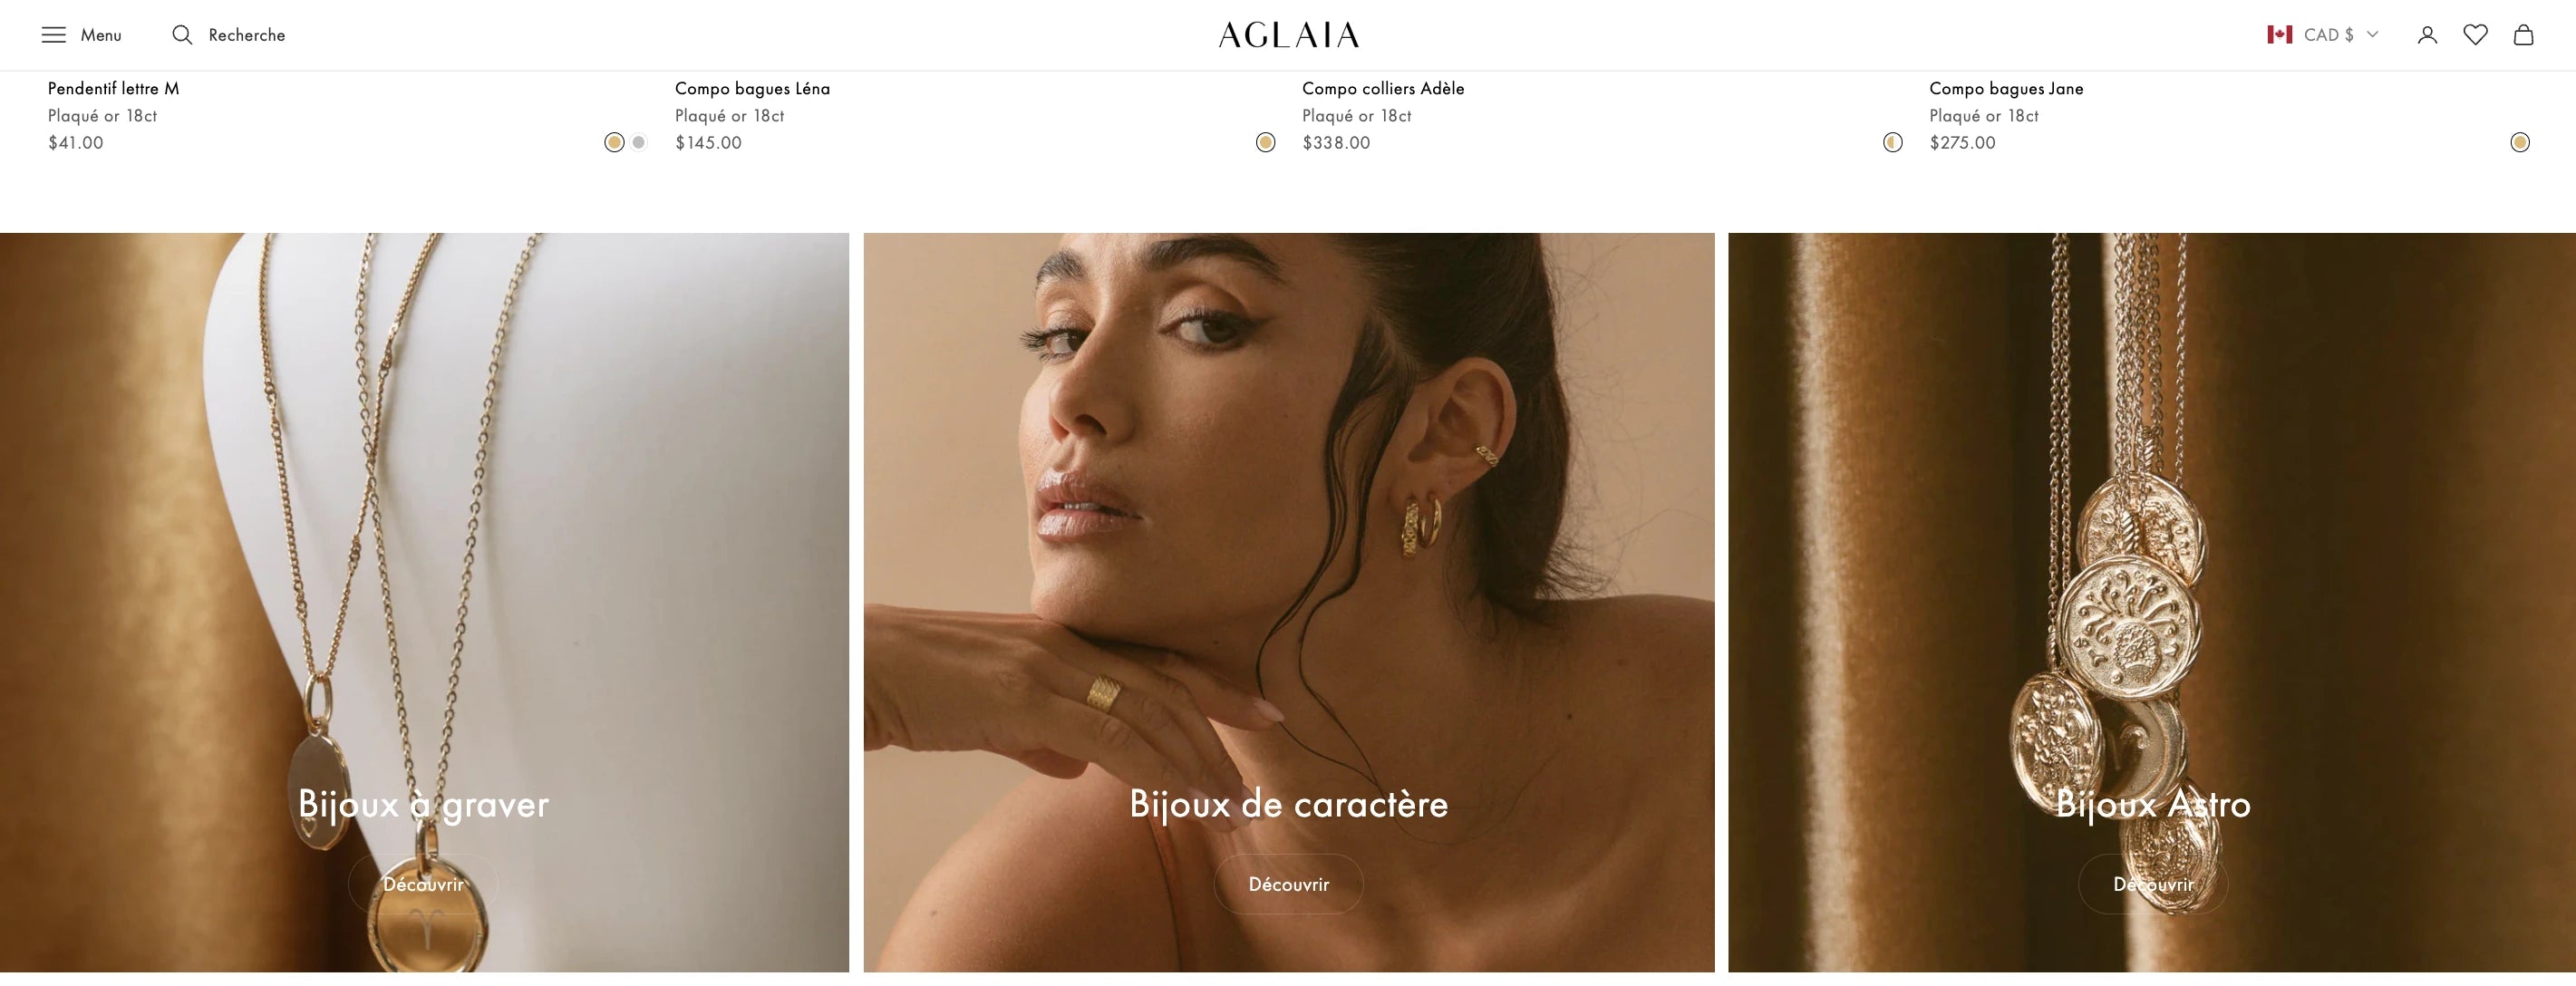 A screenshot of the Aglaia’s homepage